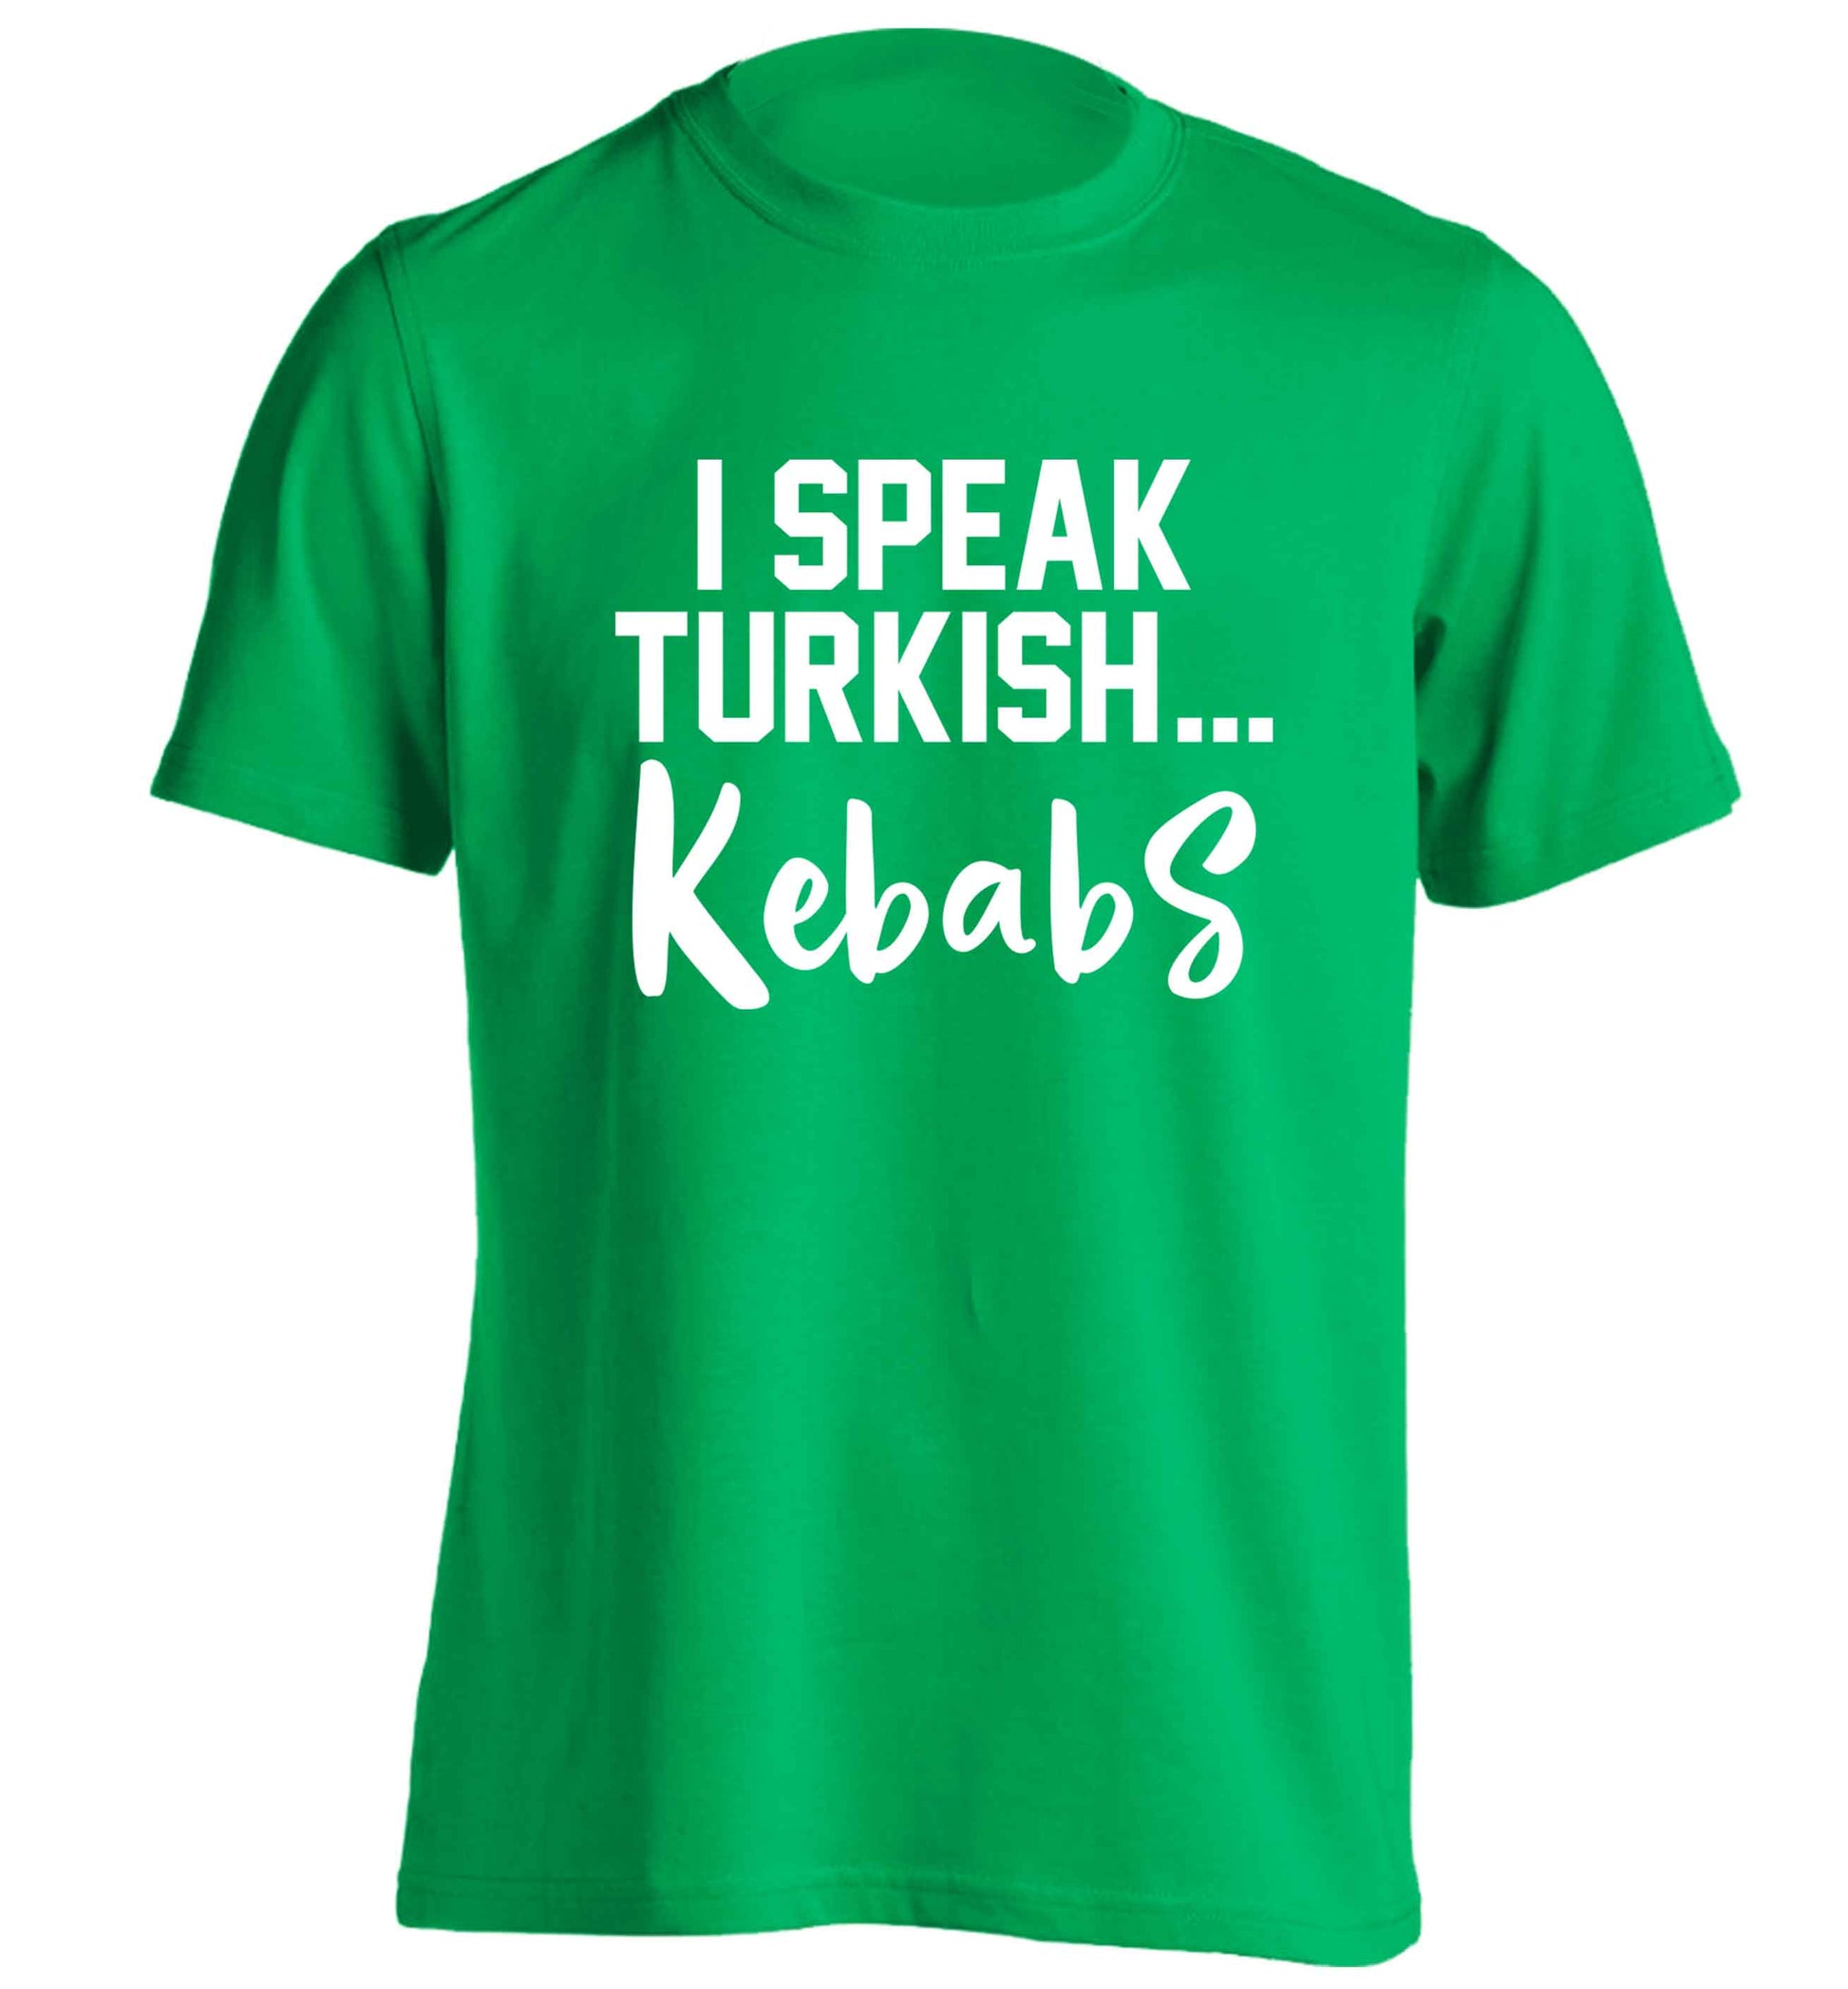 I speak Turkish...kebabs adults unisex green Tshirt 2XL